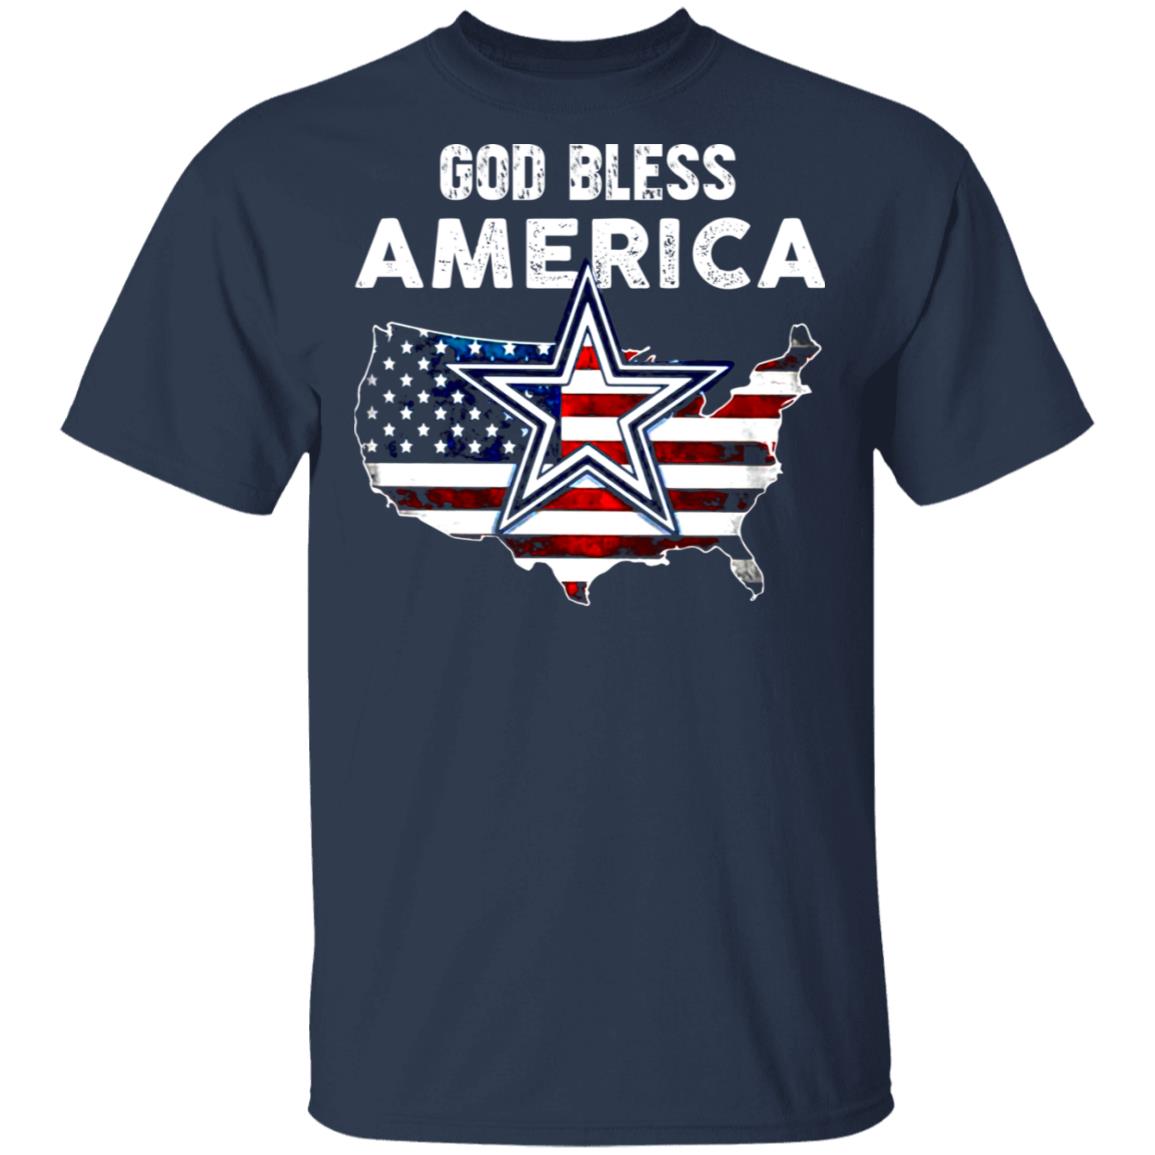 God Bless America shirt, hoodie